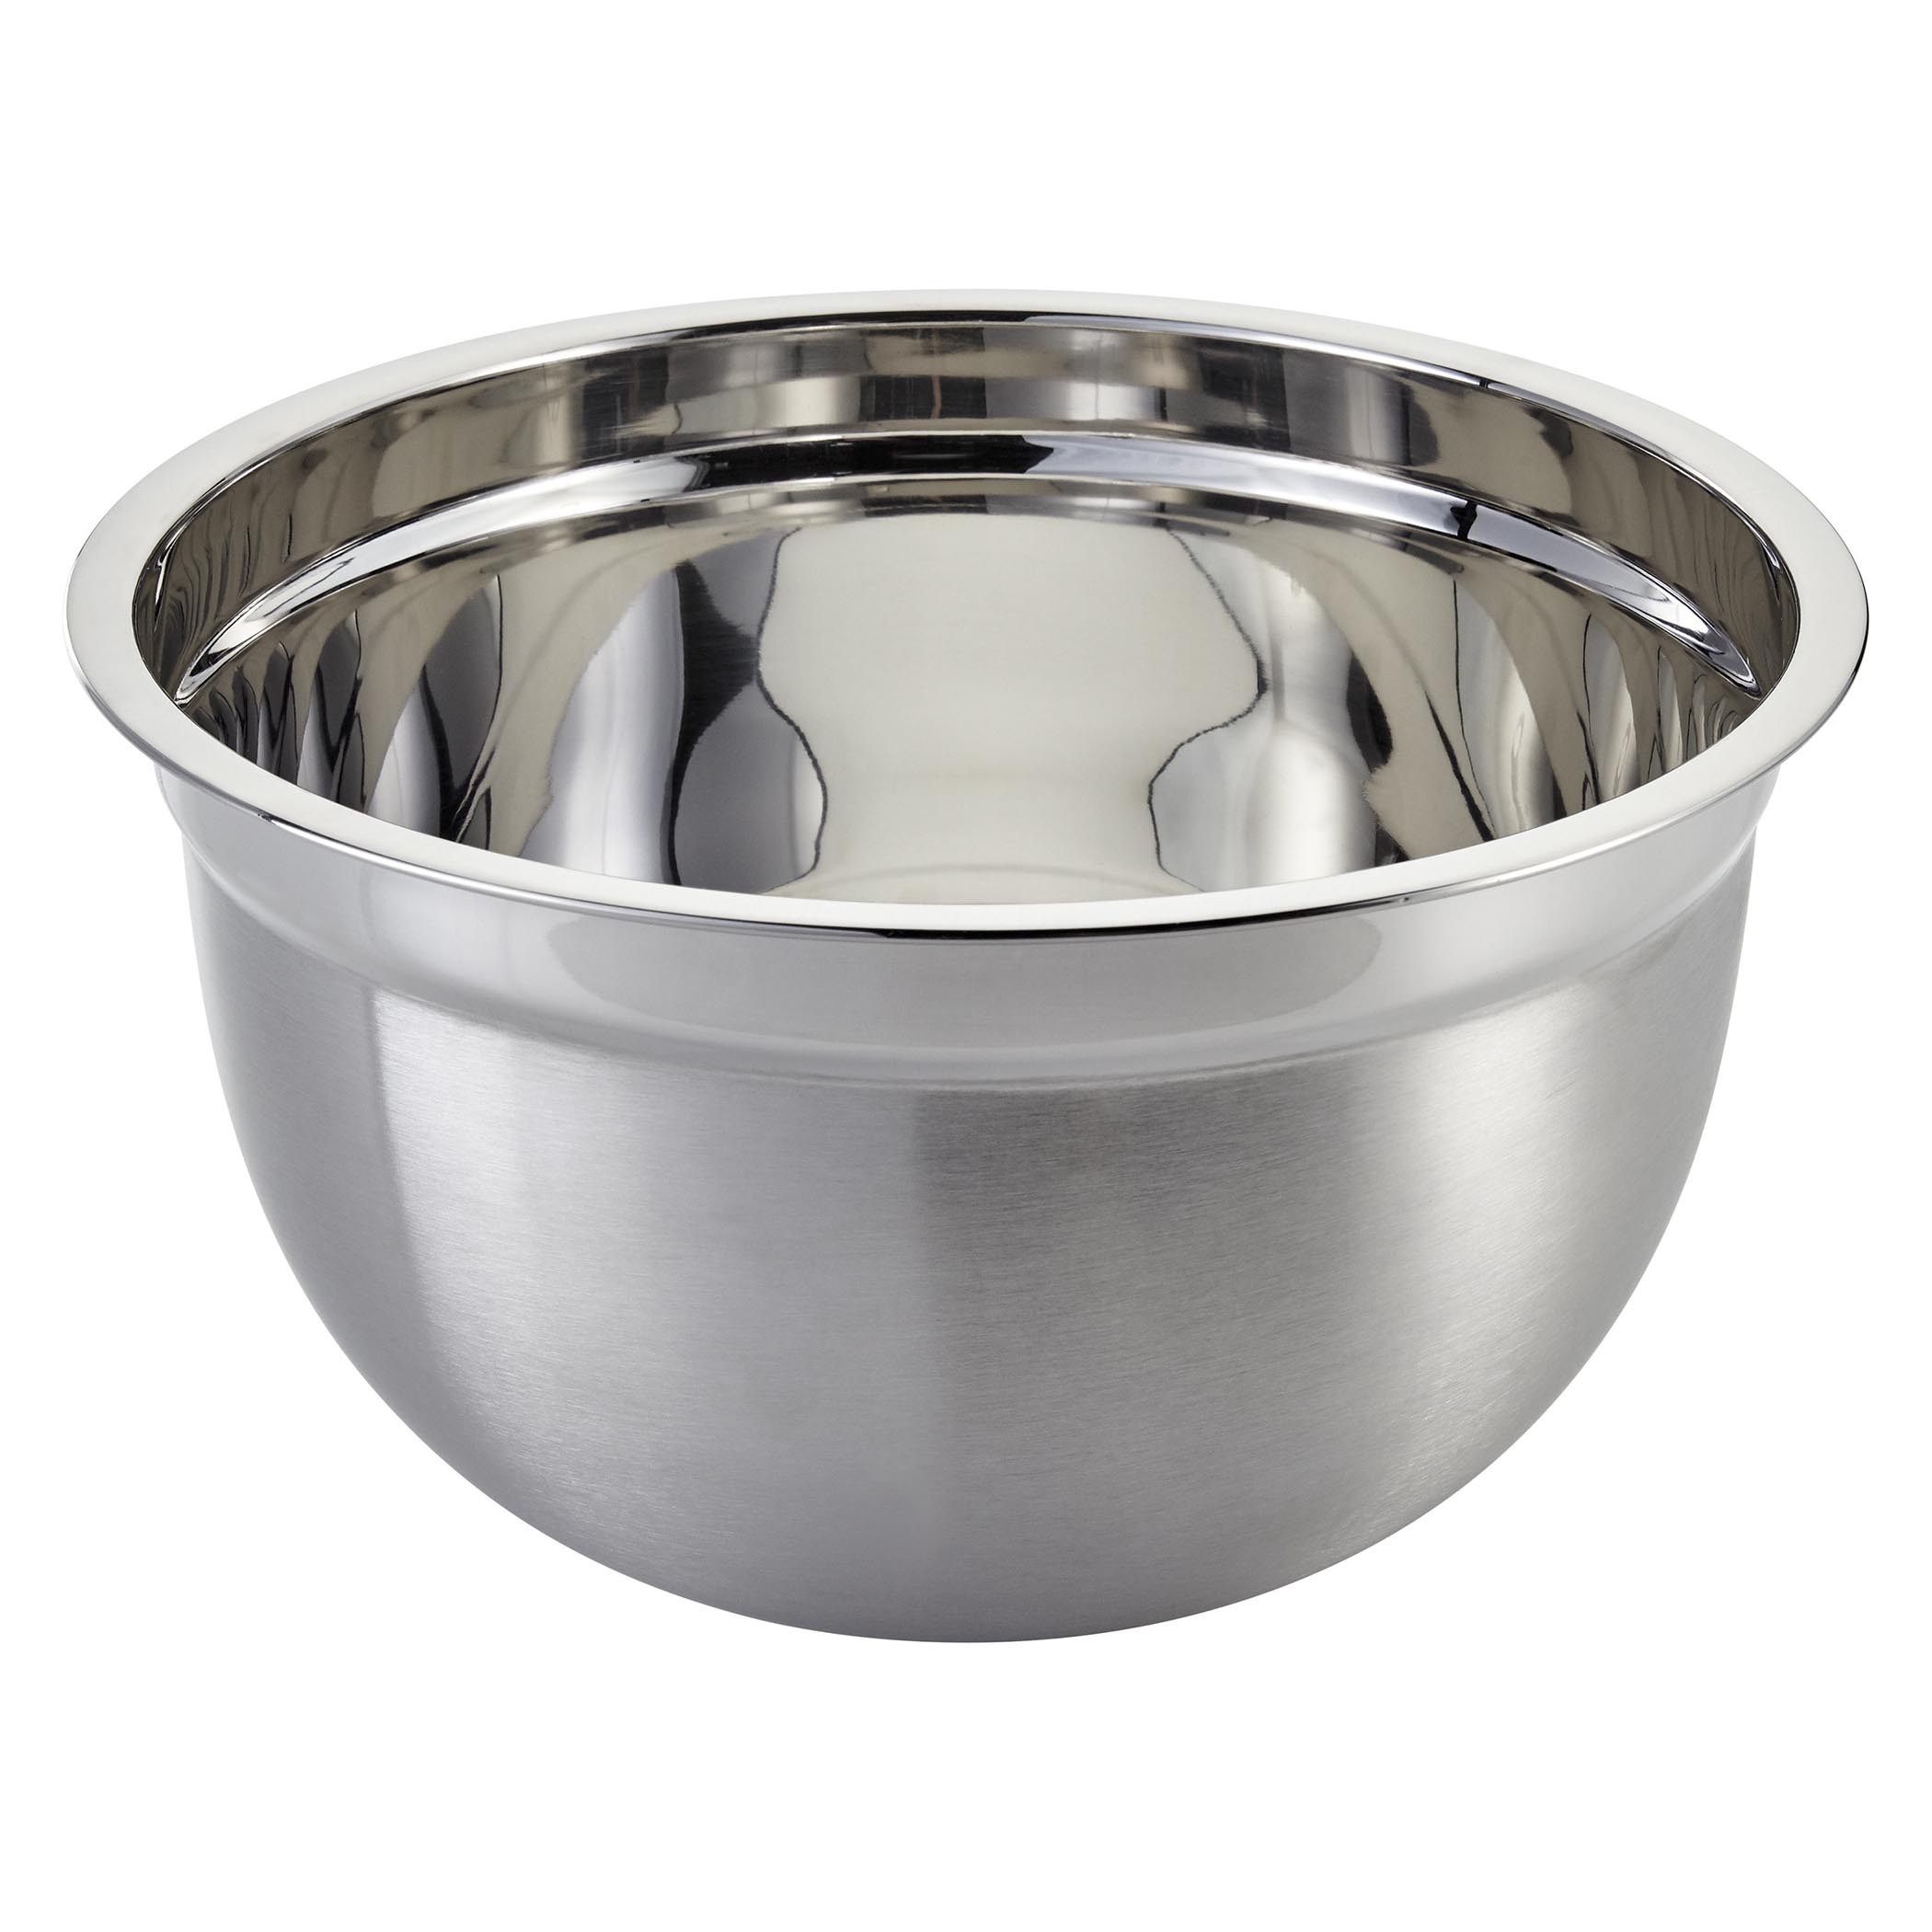 Melamine vs stainless steel mixing bowls - atiladev